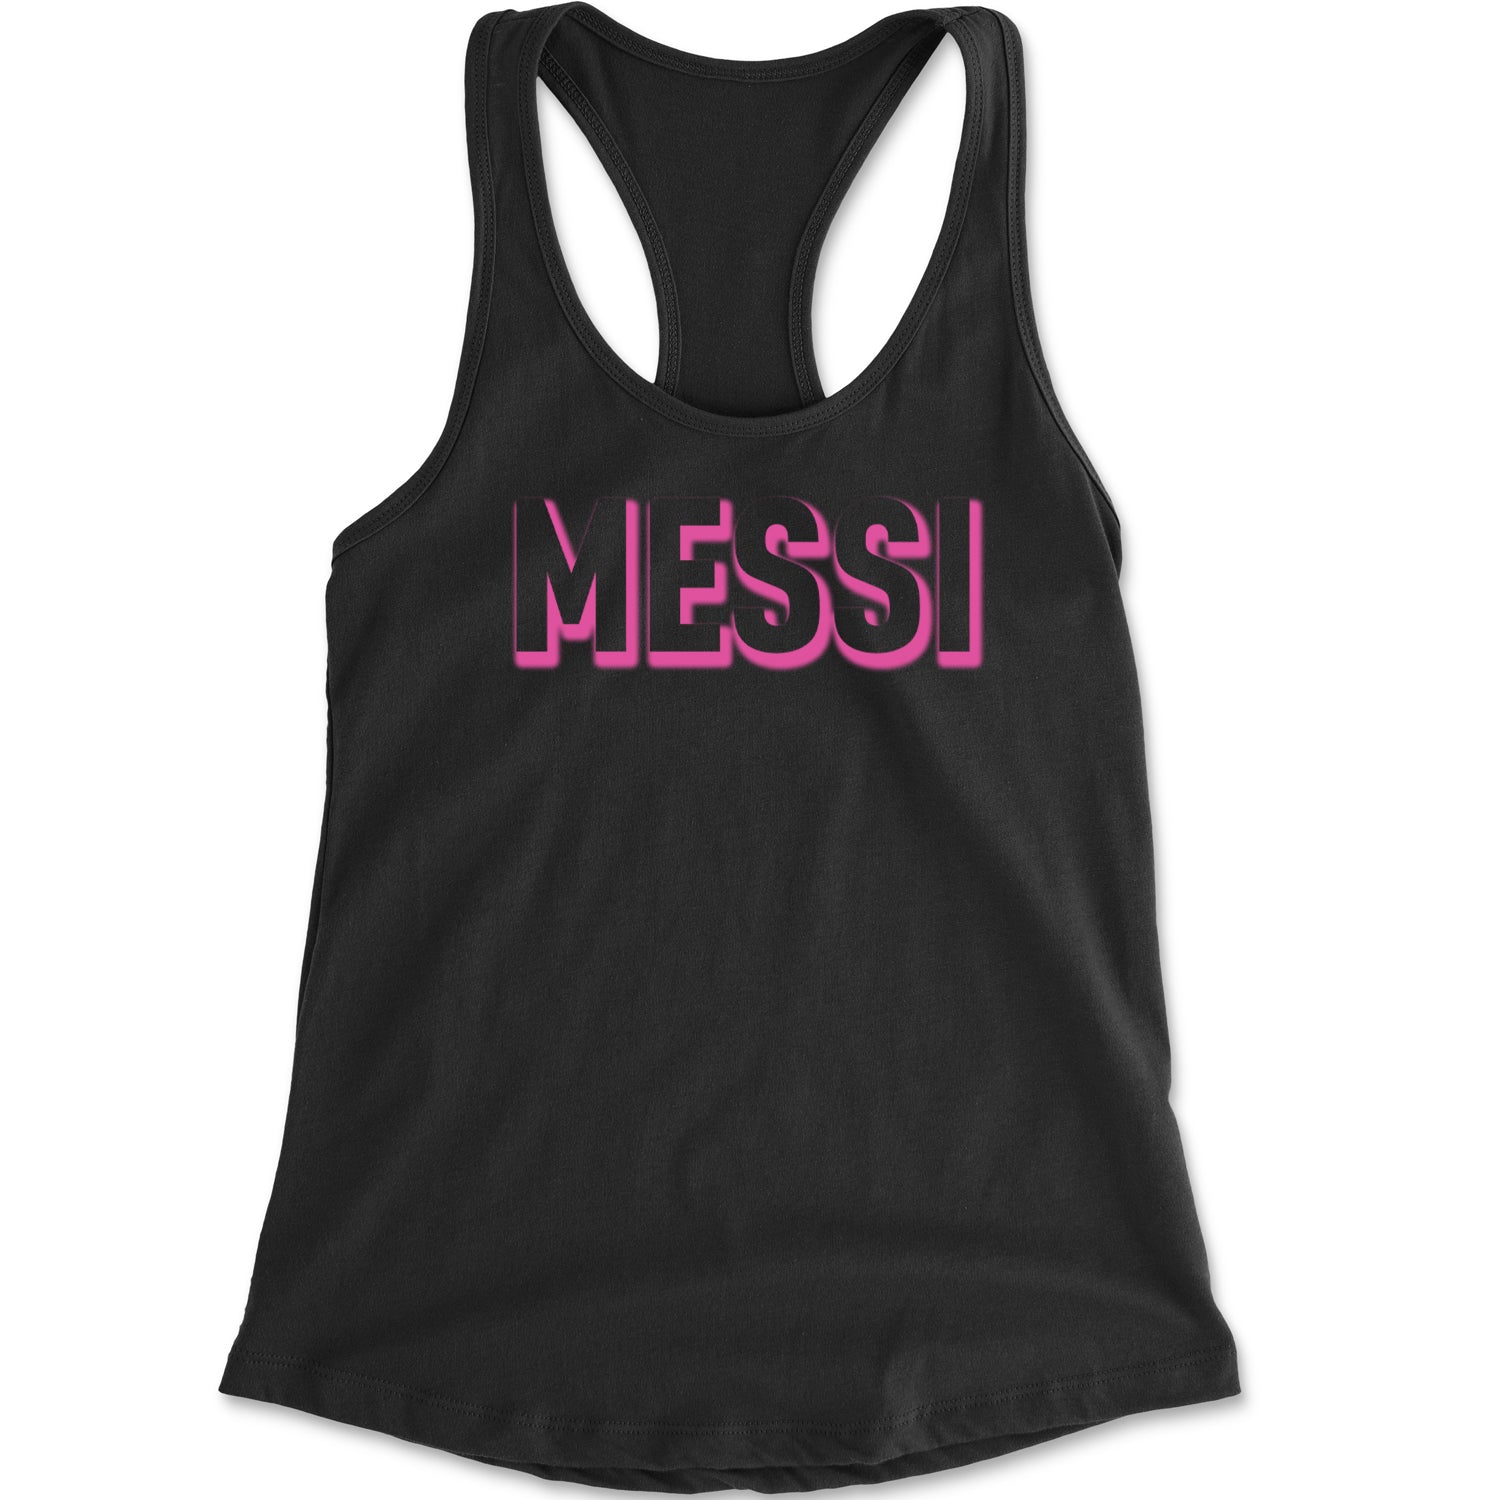 Messi OUTLINE Miami Futbol Racerback Tank Top for Women